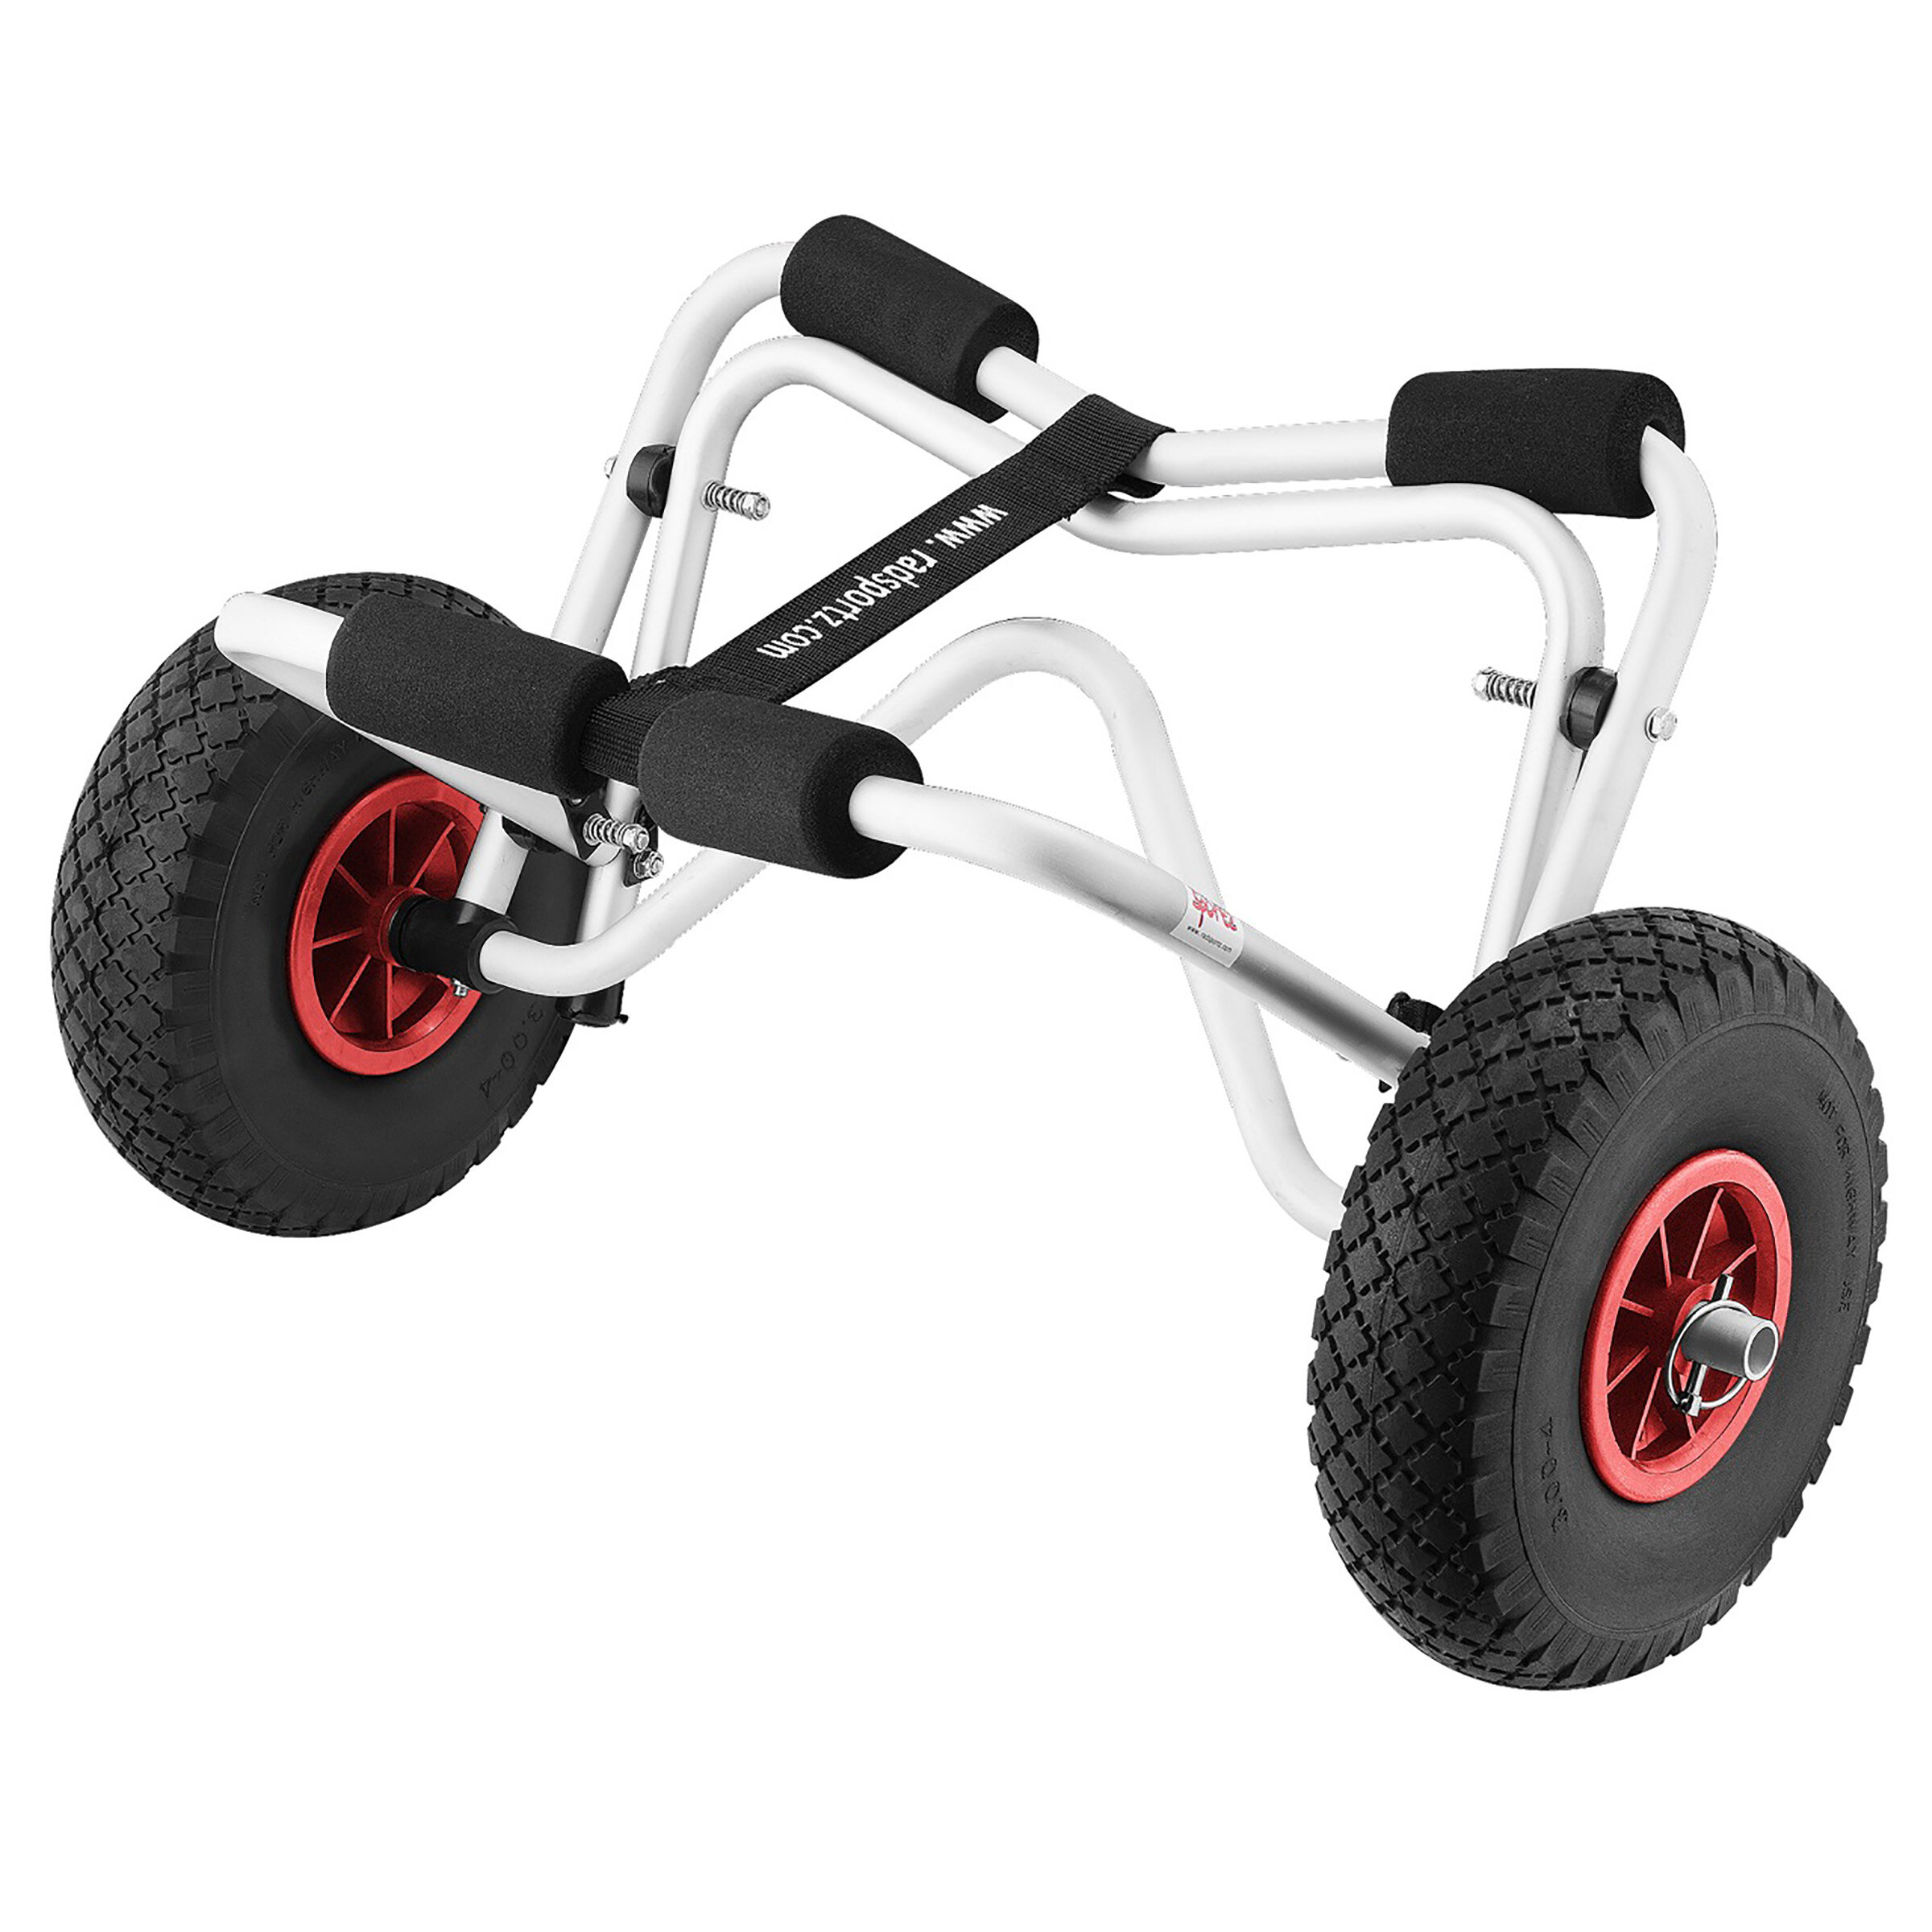 Bonnlo Kayak Cart - No-Flat Airless Tires - Sit-On-Top